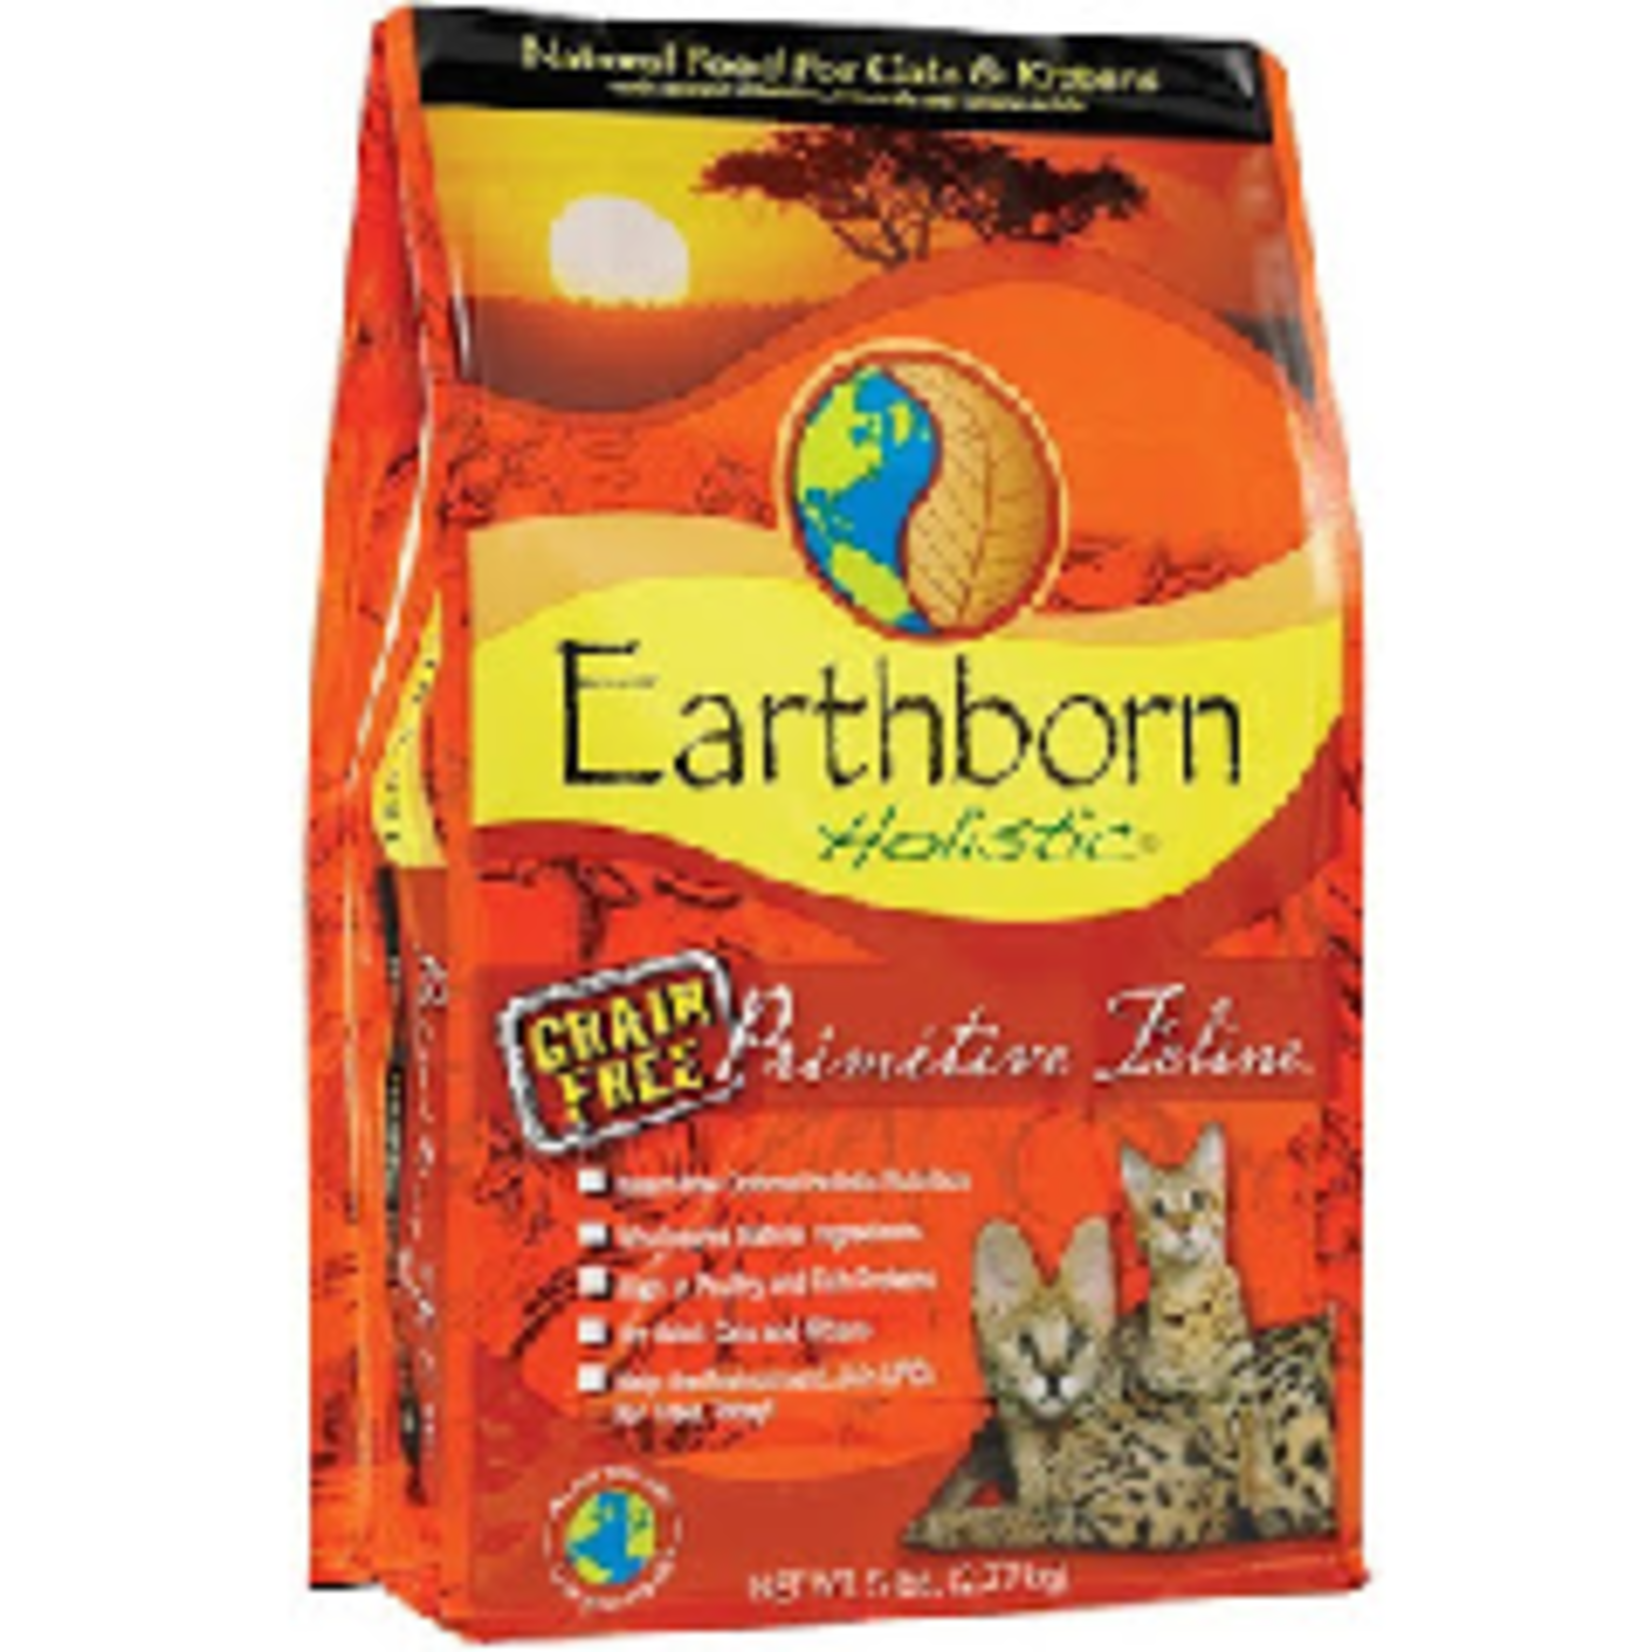 Earthborn Primitive Feline Grain Free Cat 5# Earthborn